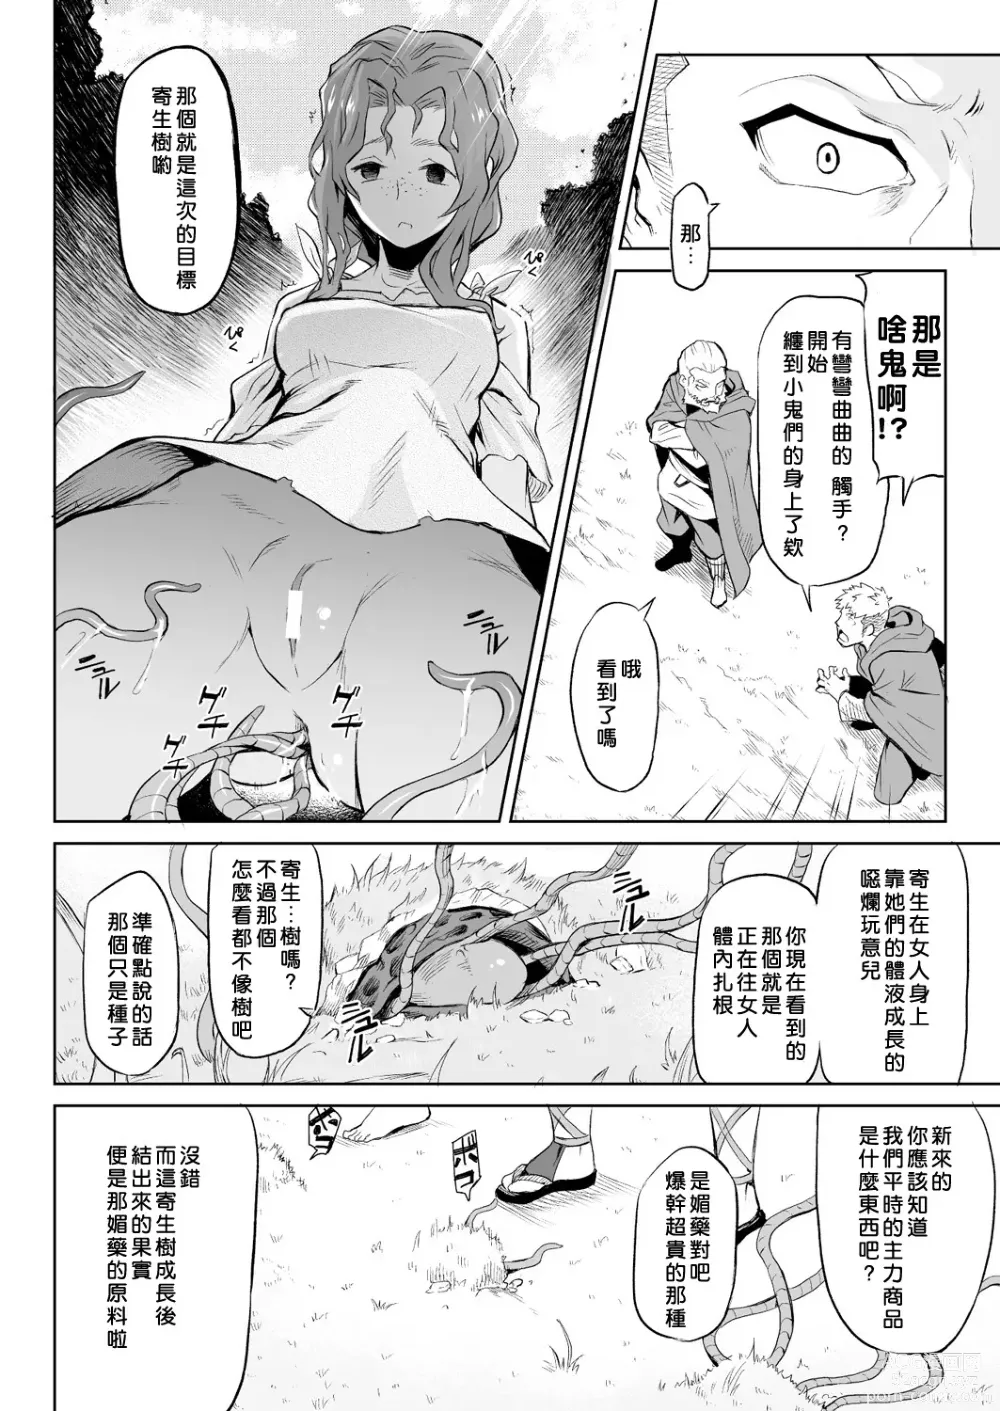 Page 11 of manga Ishu Kitan